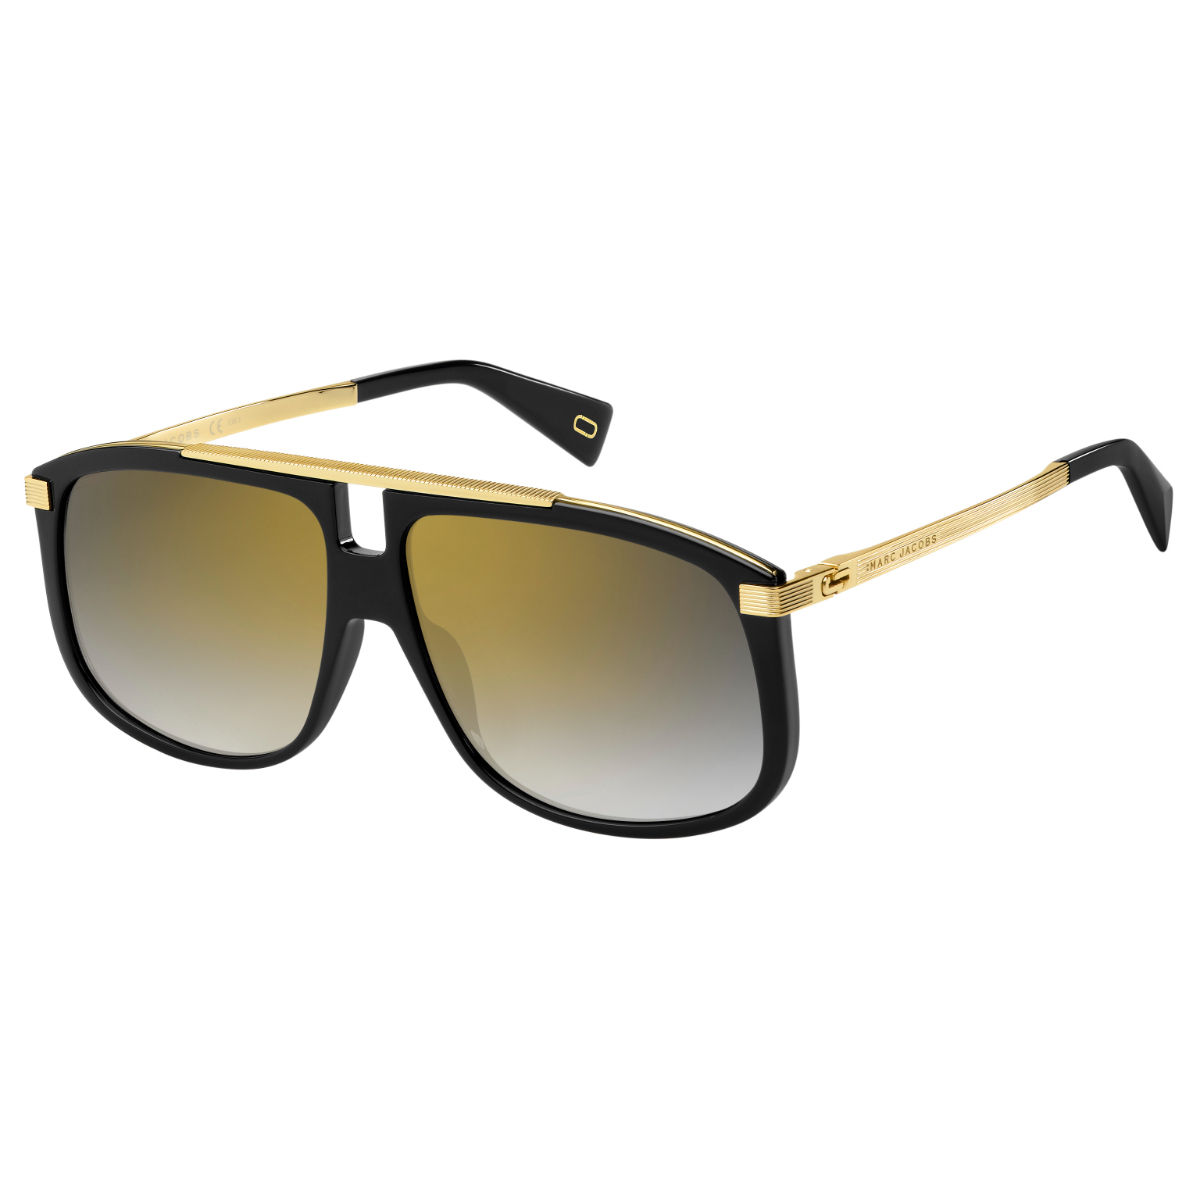 Marc Jacobs Sunglasses MJ252/S OJOJS Black Havana Grey Gradient Lens 60[]13  135 | eBay